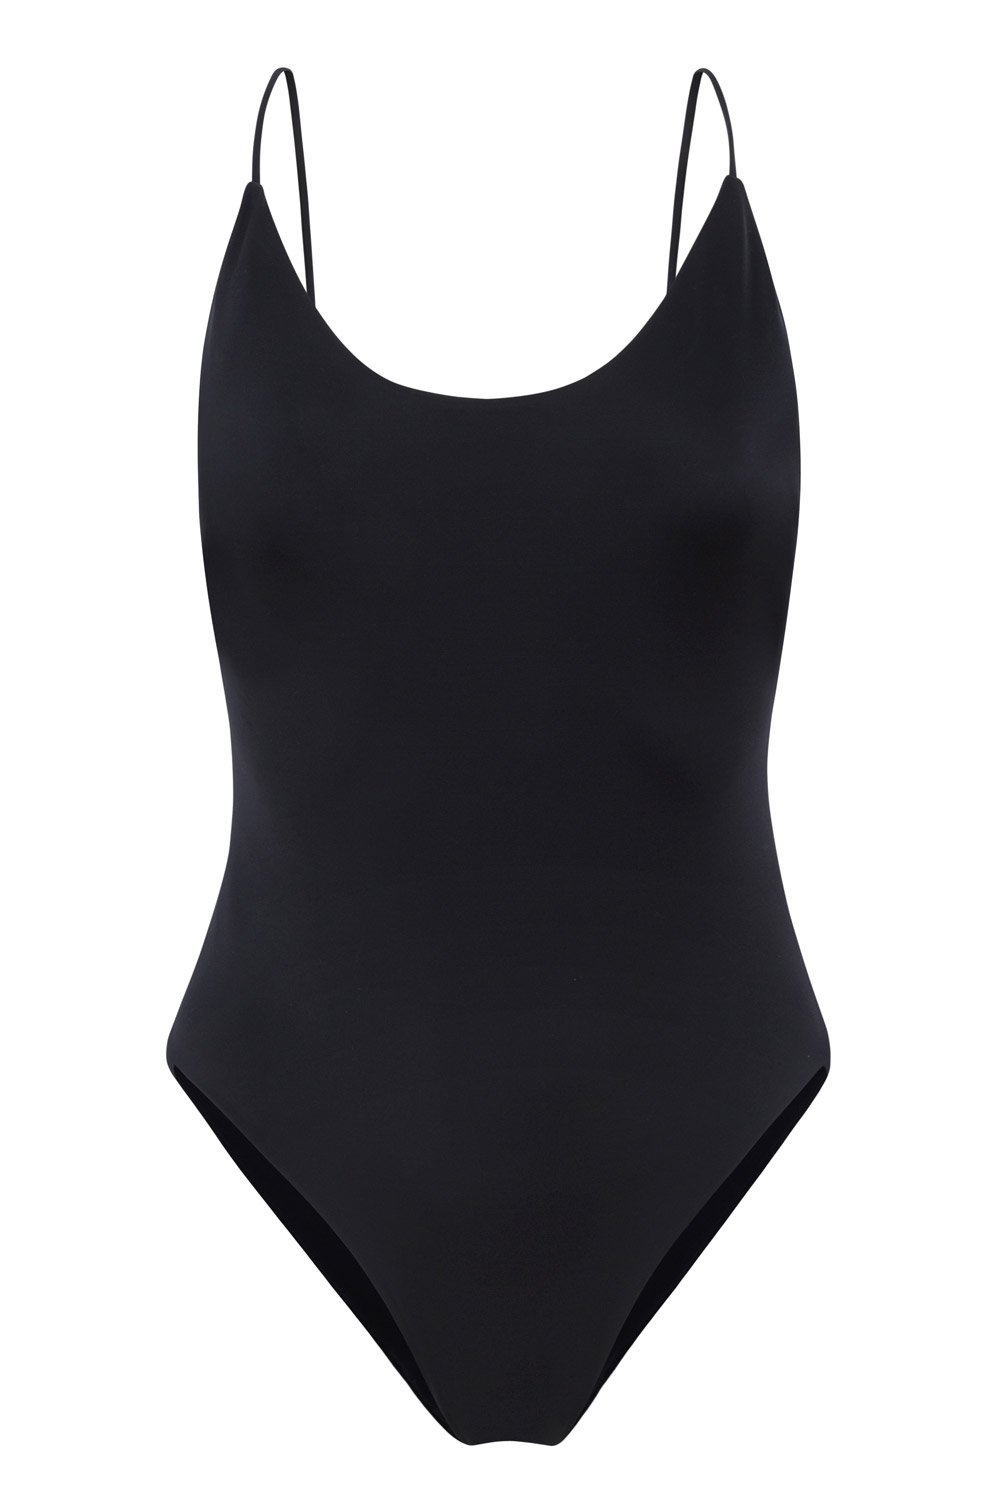 Sustainable Luxury Swimwear / Ropa de baño sostenible, eco swimsuit / bañador ecológico. Alona onepiece in black, by NOW_THEN